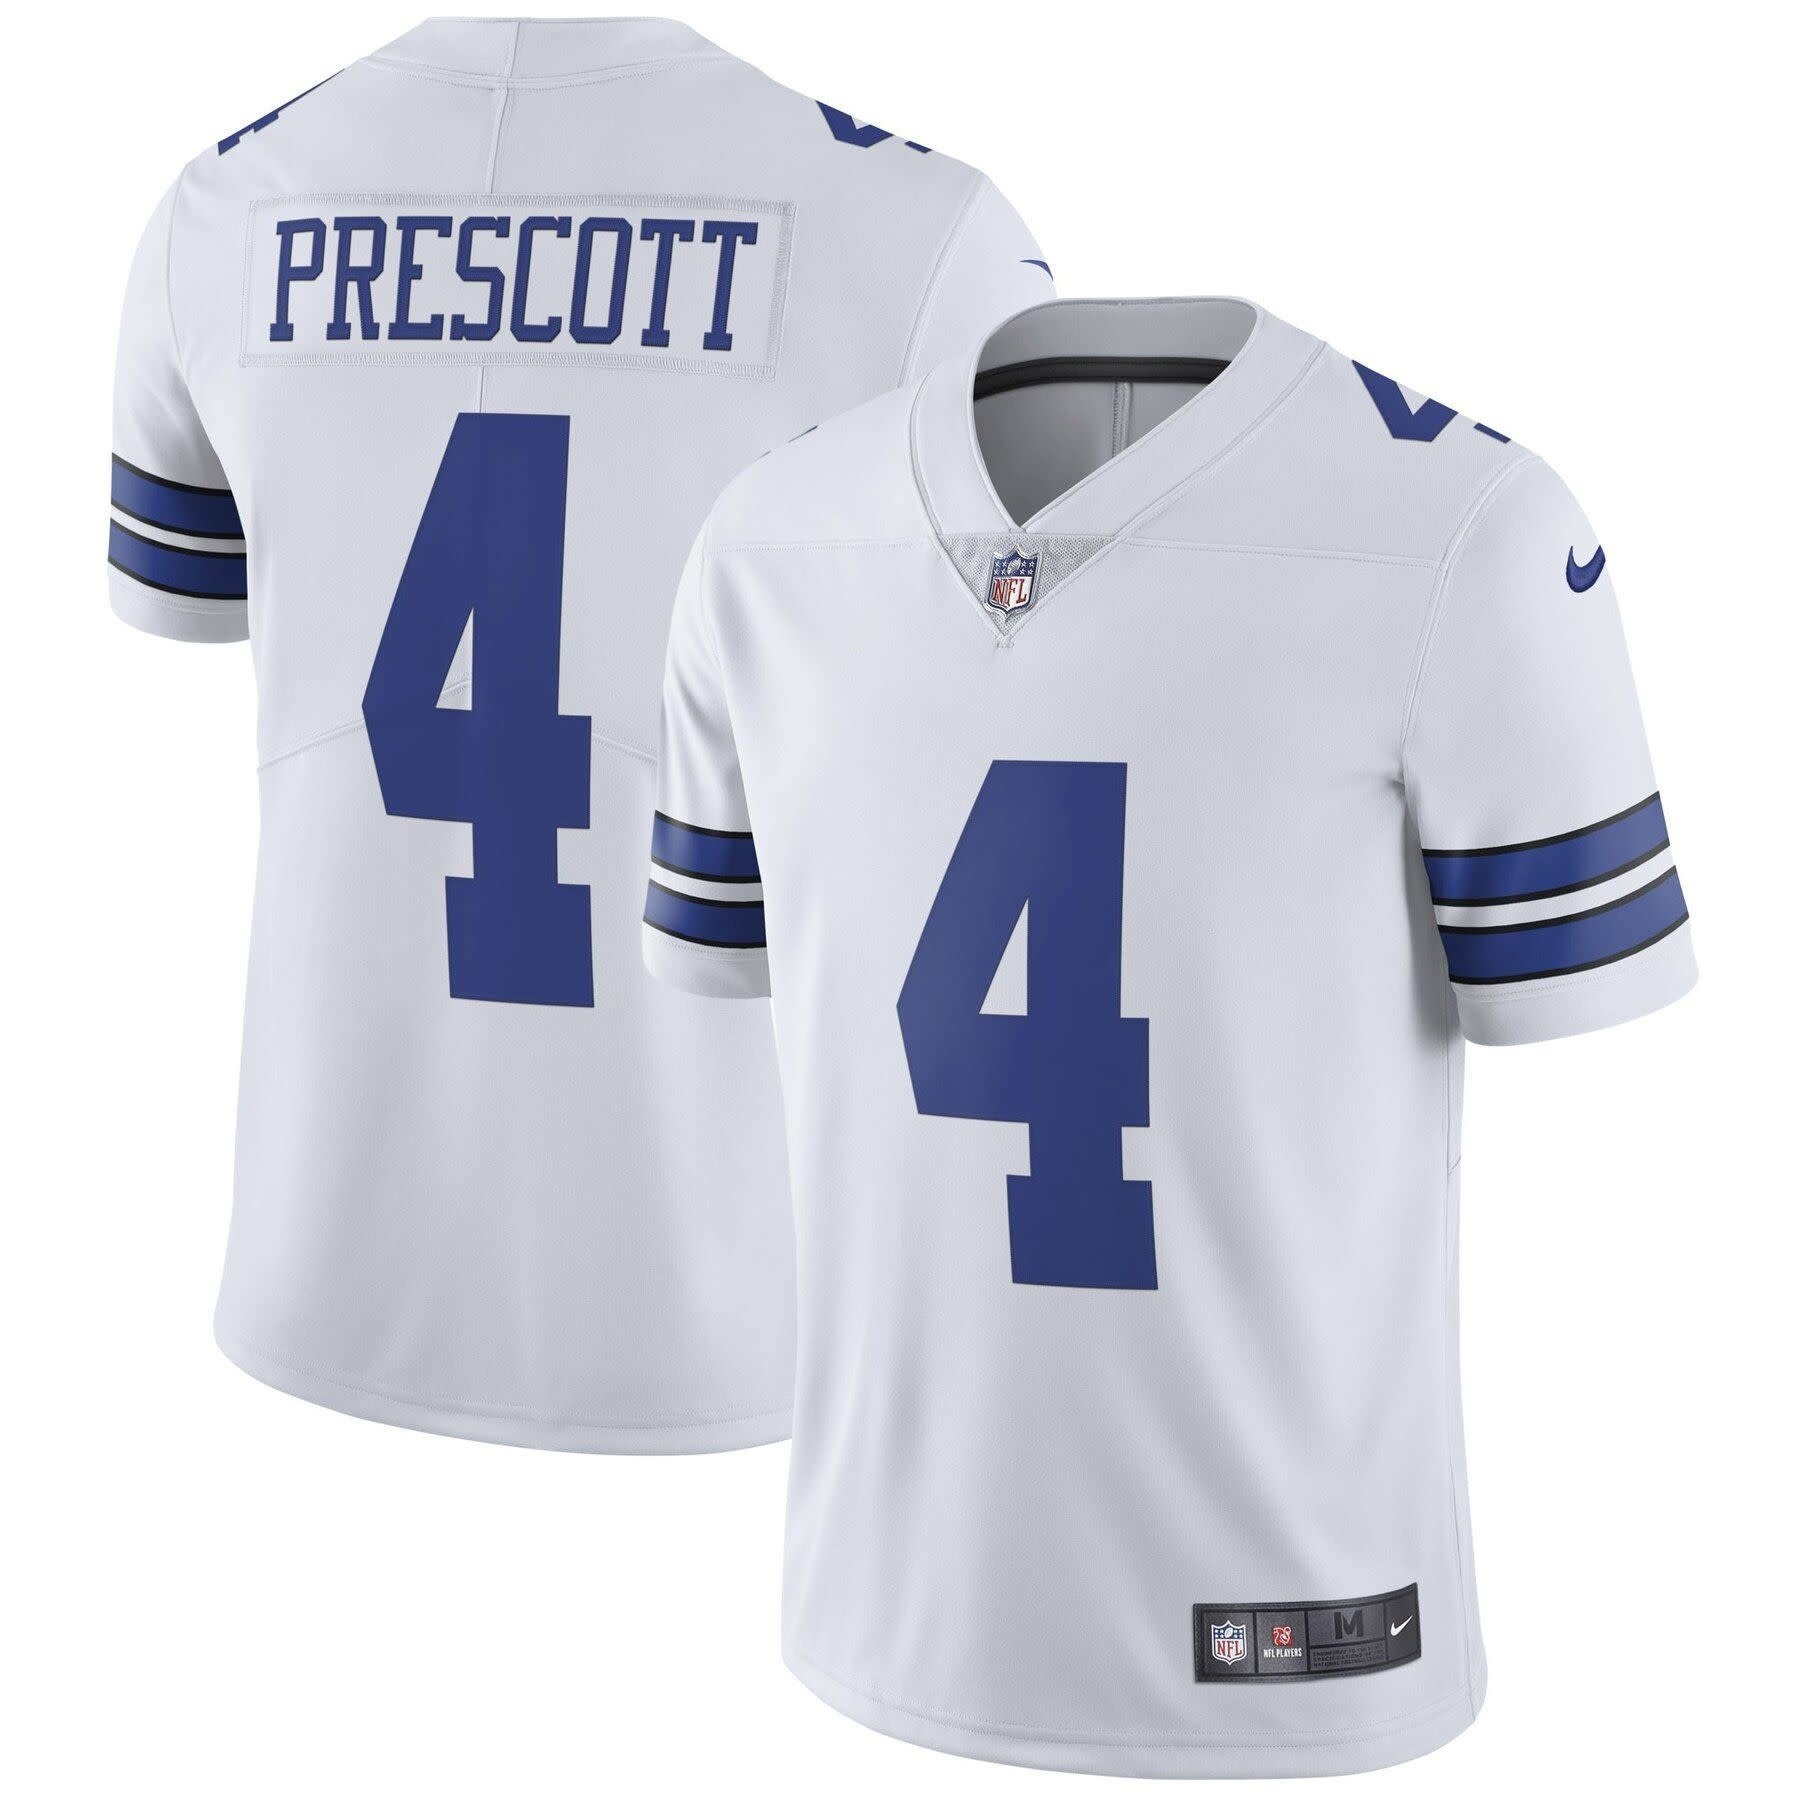 NFL Dallas Cowboys Men's Nike Dak Prescott #4 Limited Jersey White